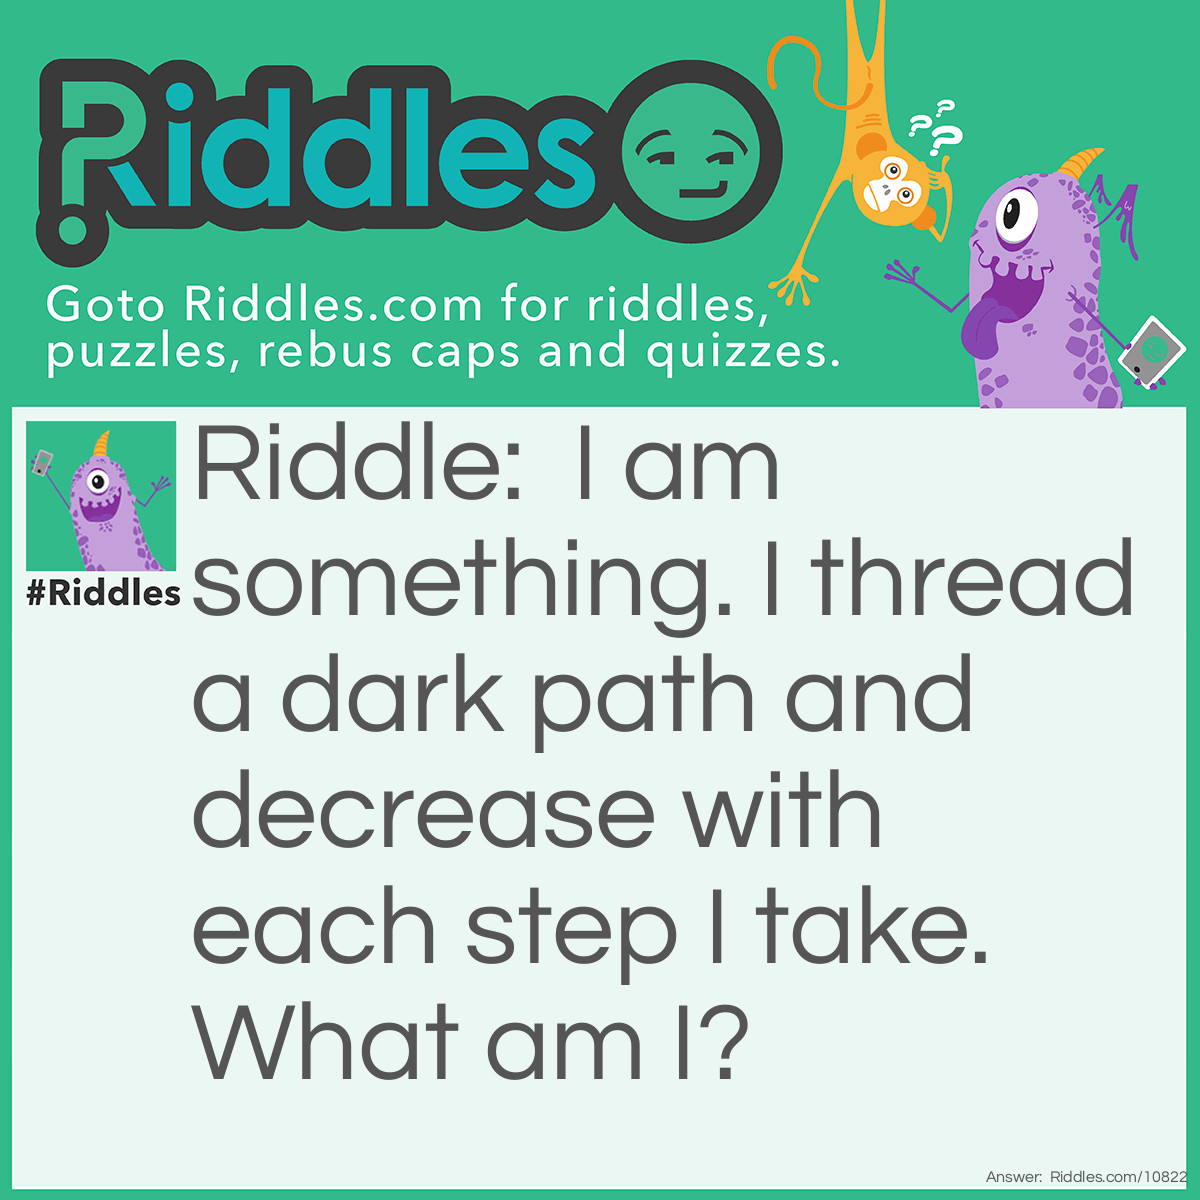 Riddle: I am something. I thread a dark path and decrease with each step I take. What am I? Answer: Chalk.